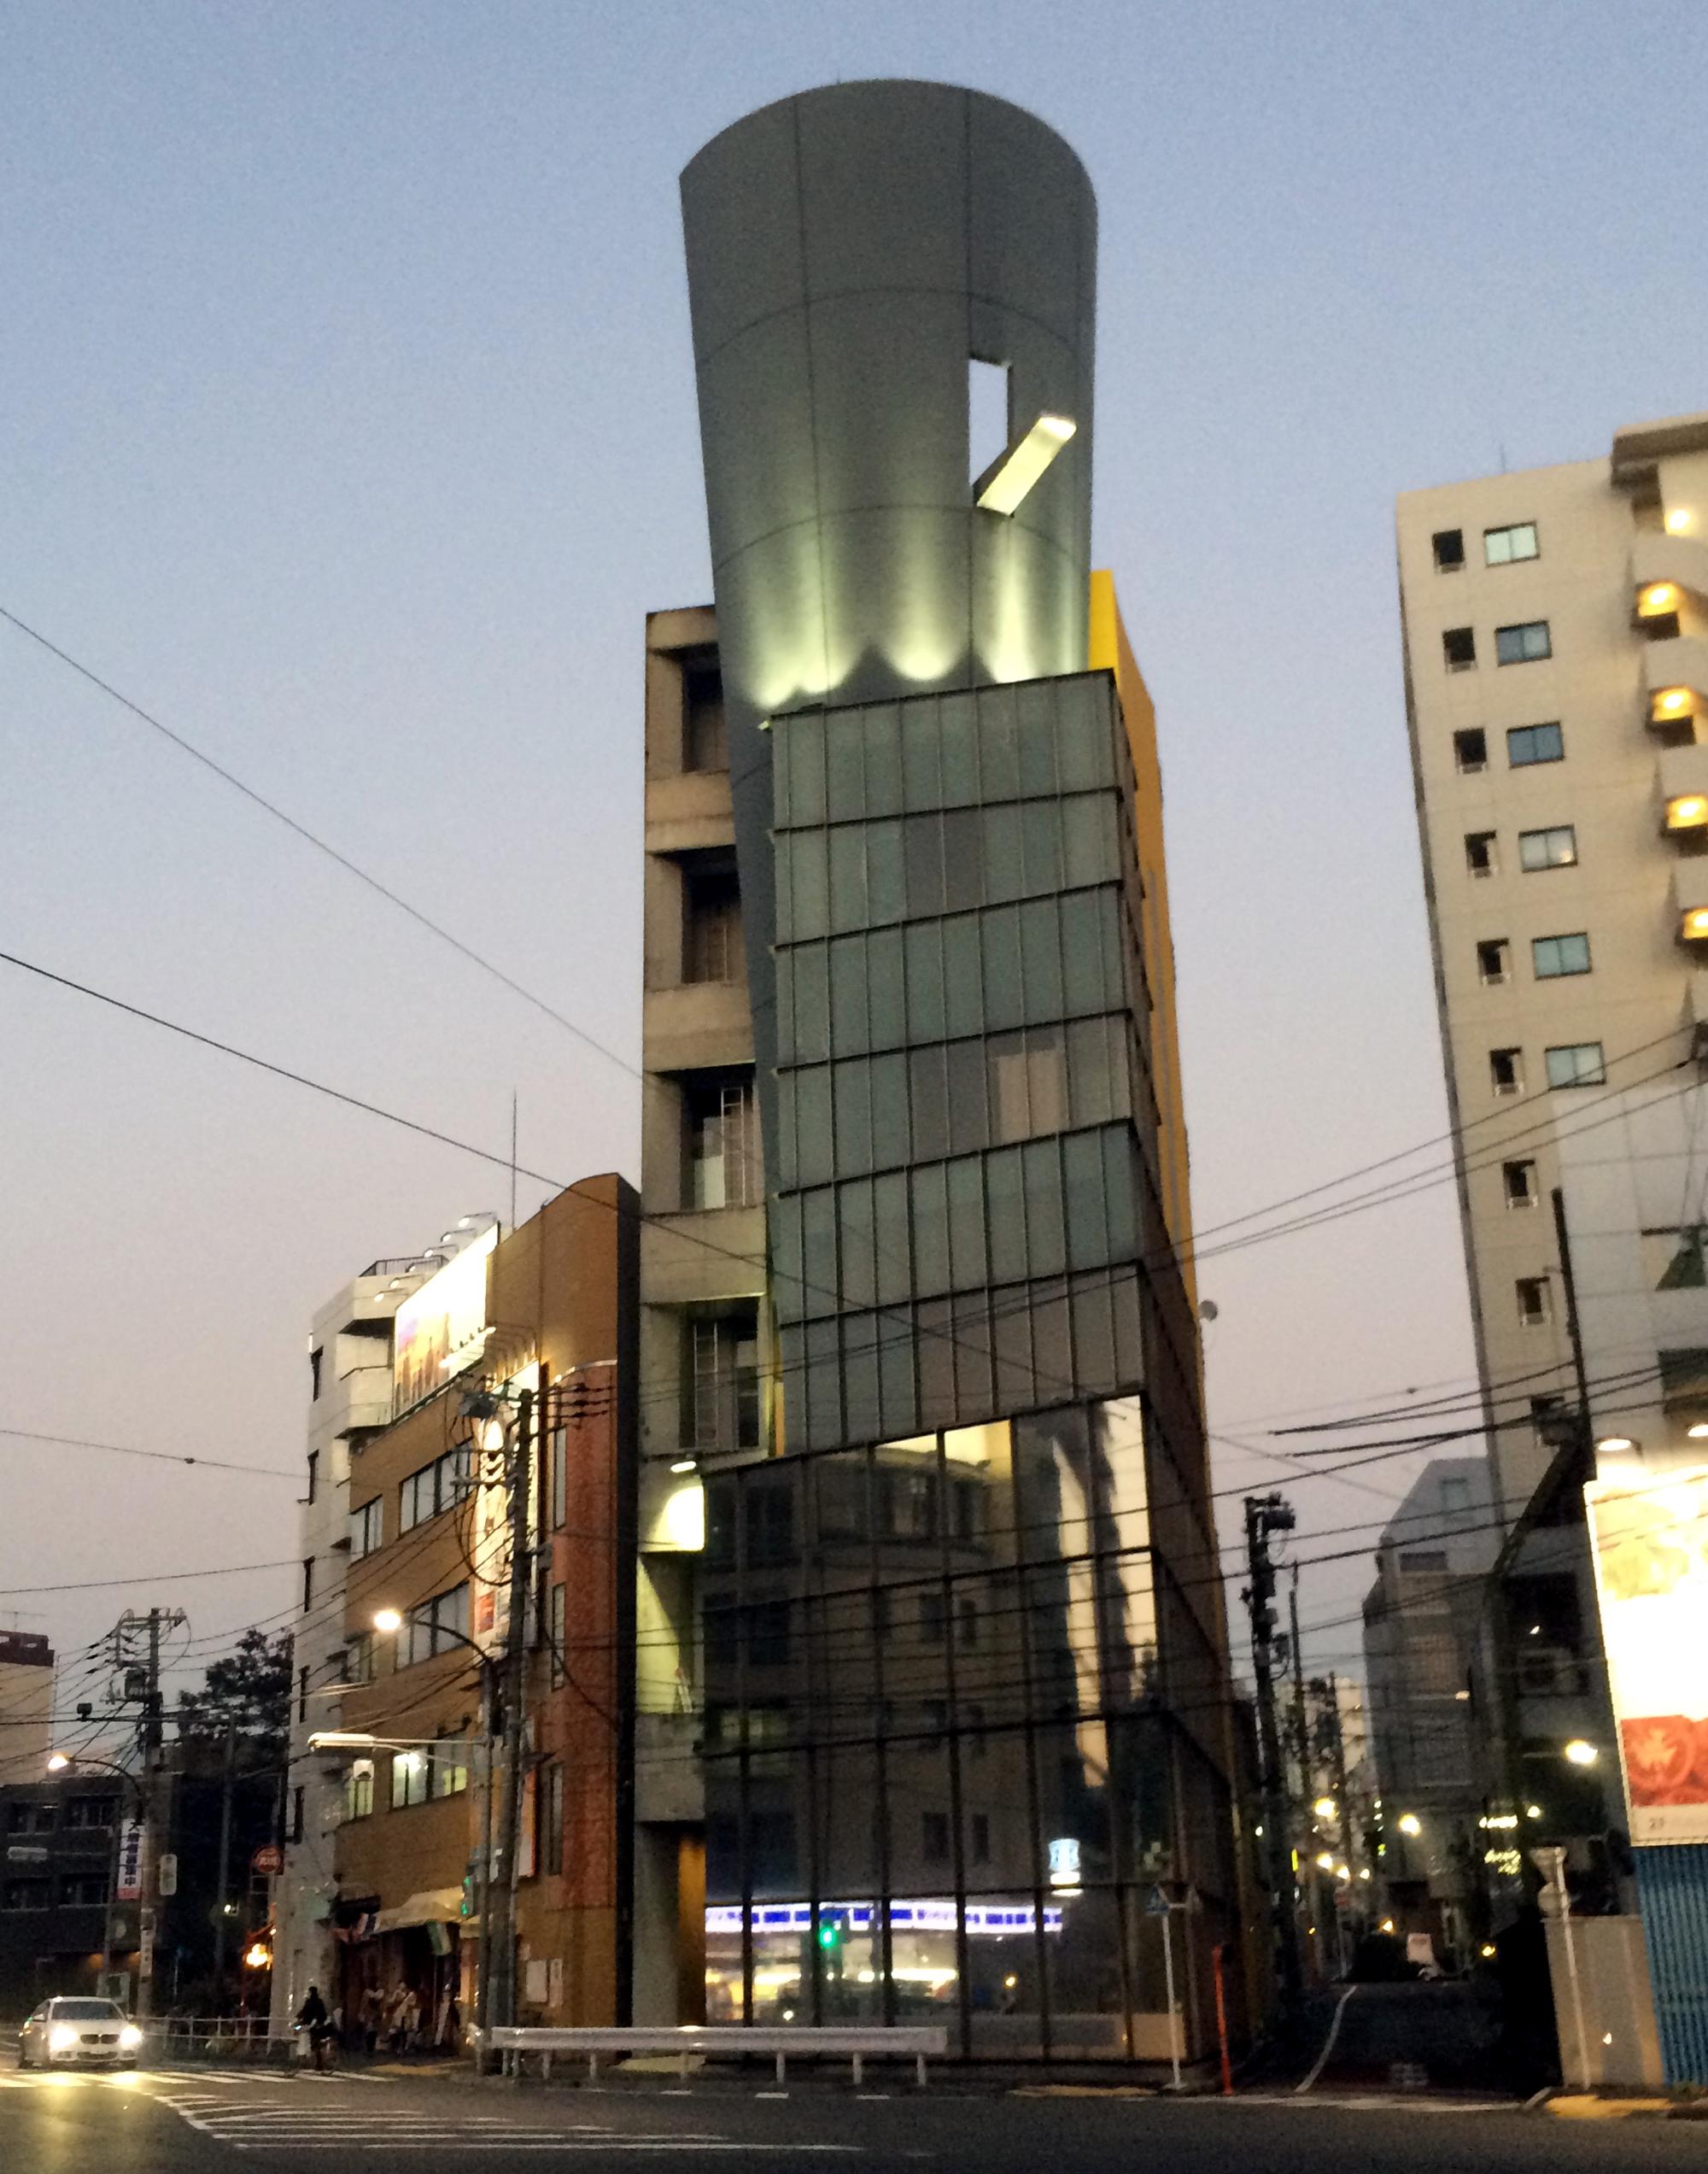 Tokyo (2015) - Architecture #3